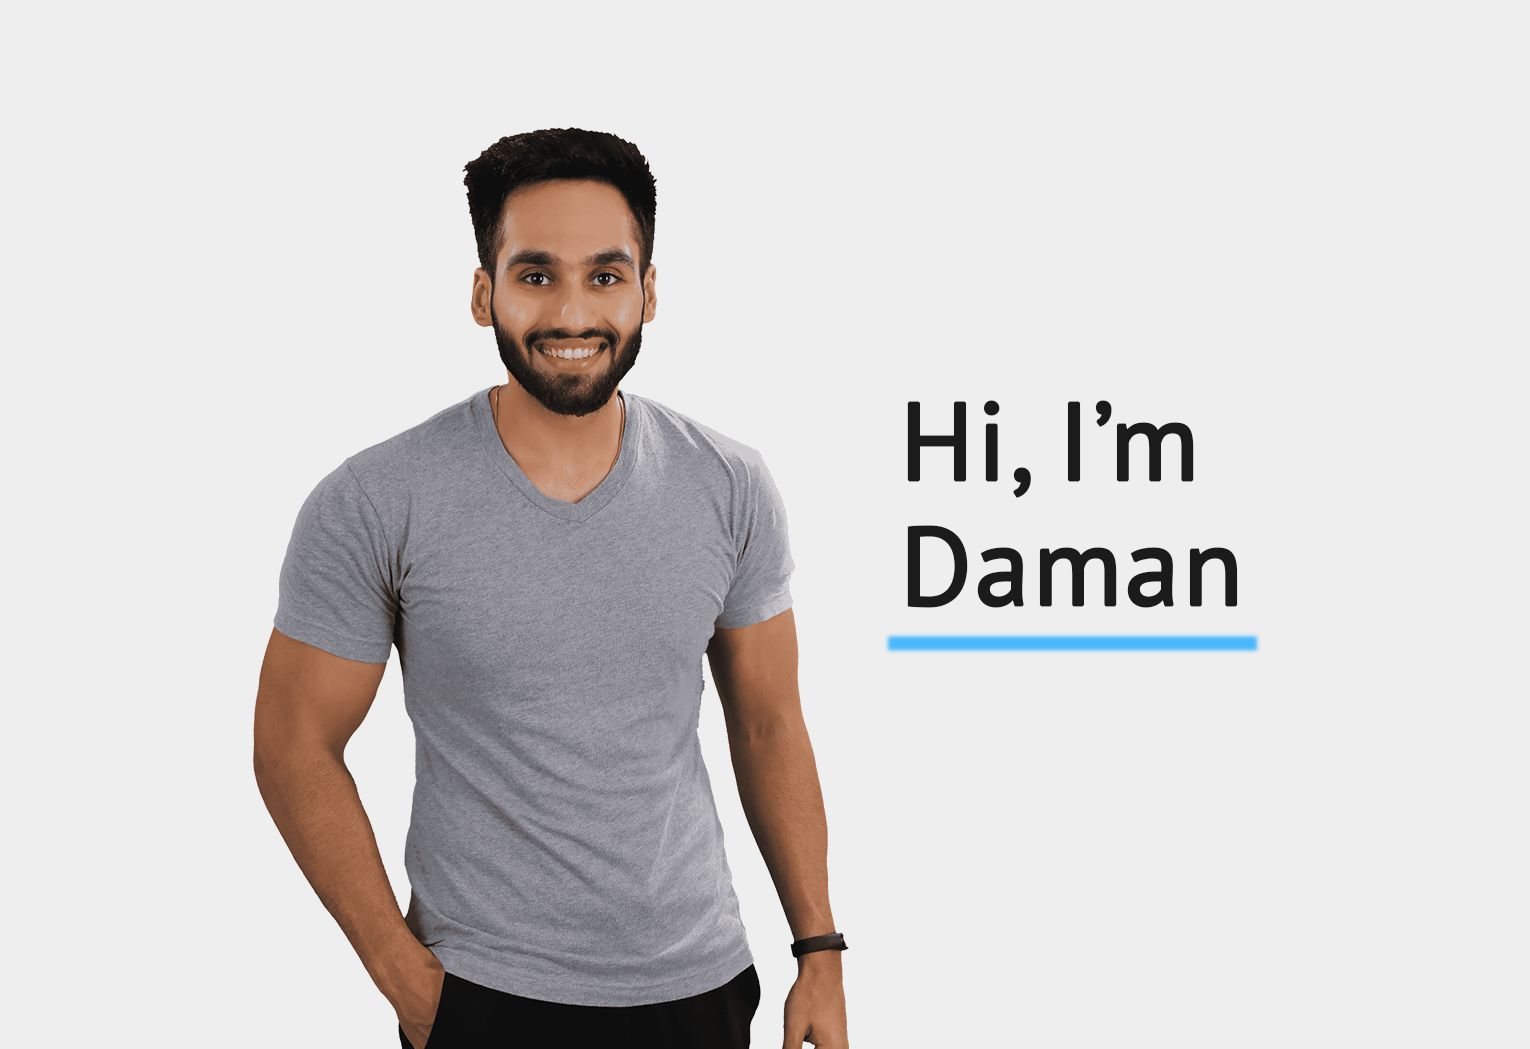 Hey, It’s Me, Daman